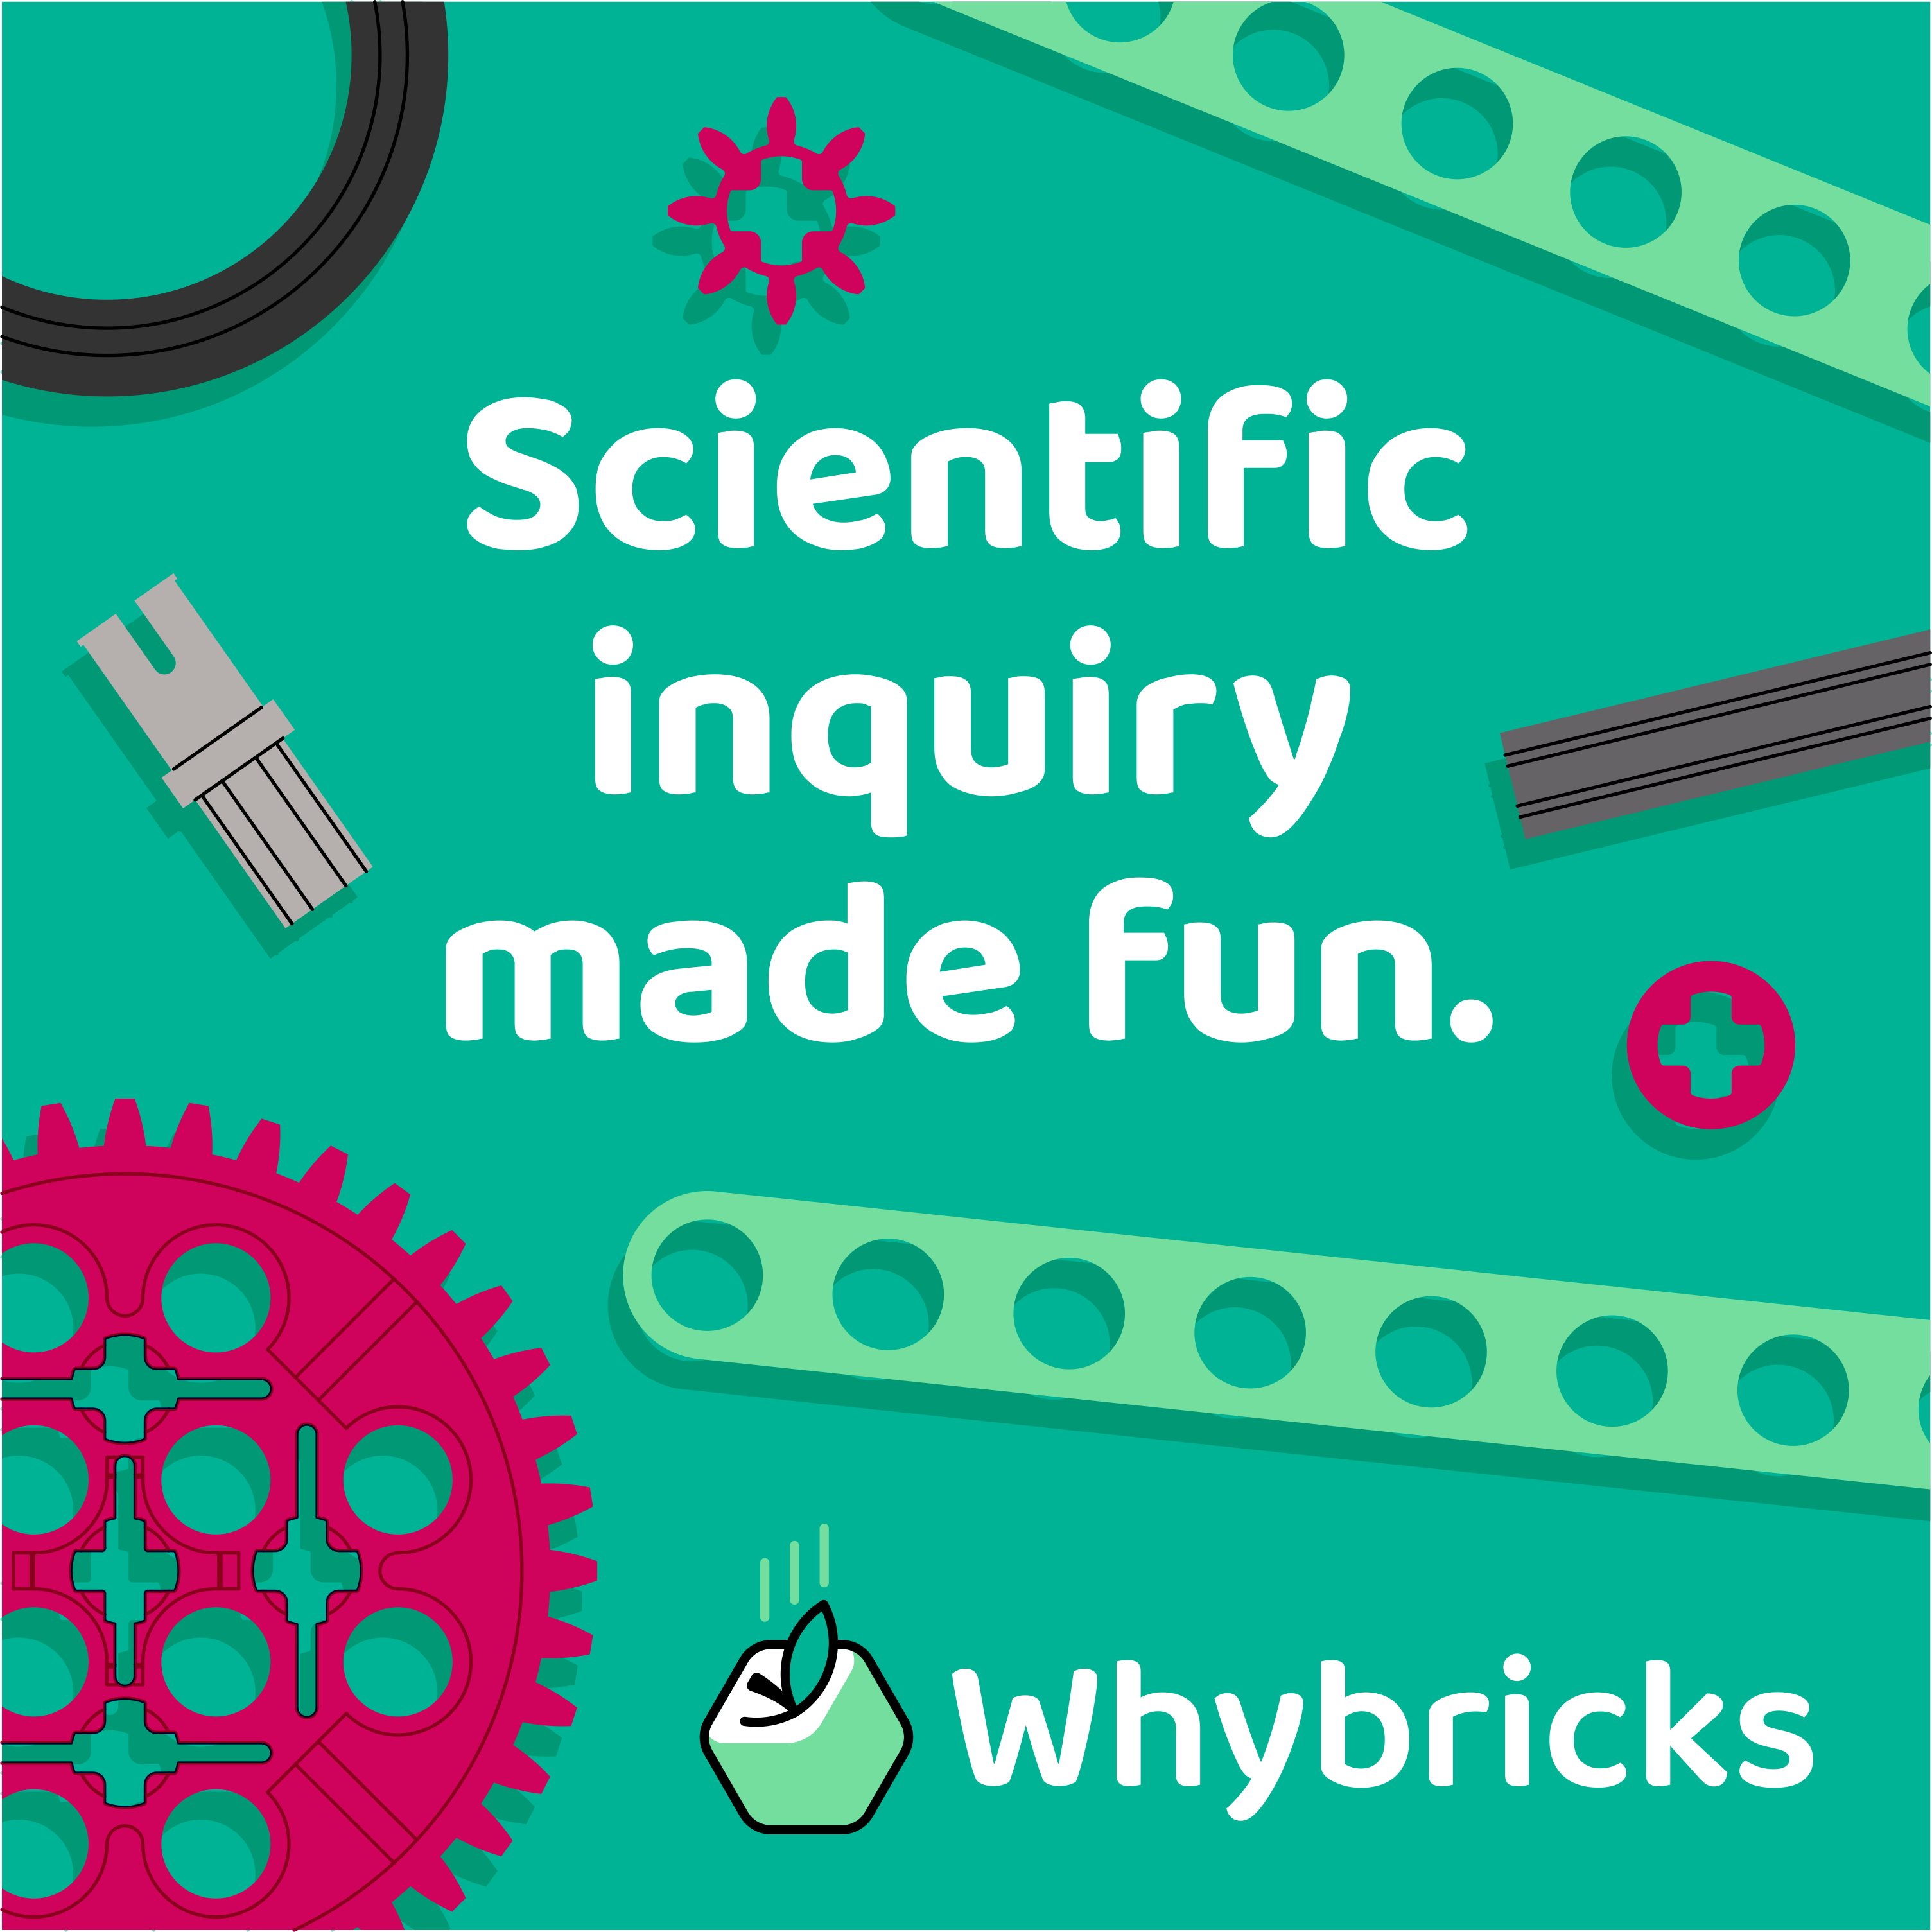 Scientific inquiry made fun